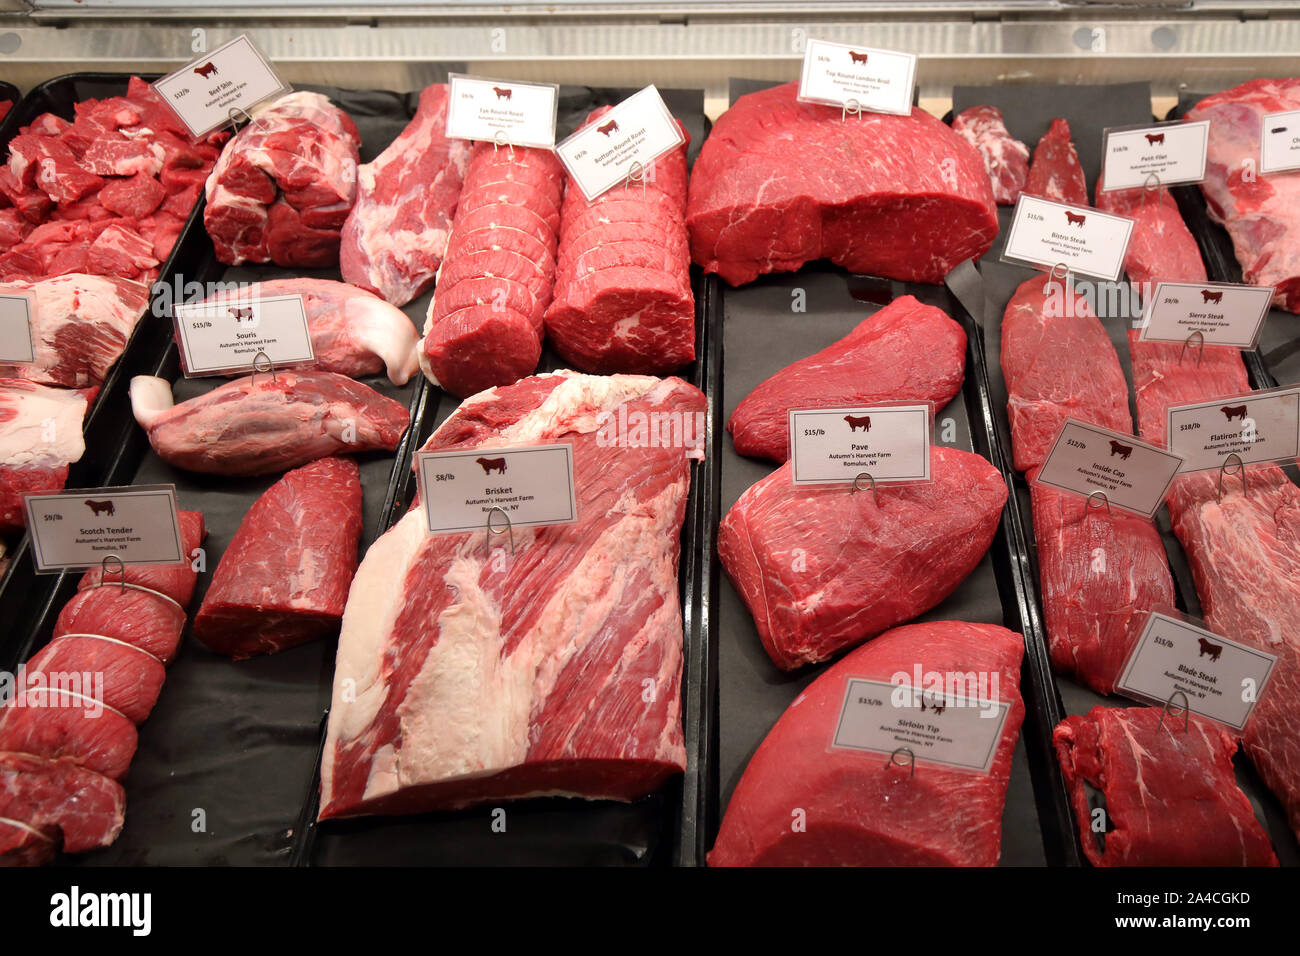 Cuts of beef on display at Essex Street Shambles Stock Photo